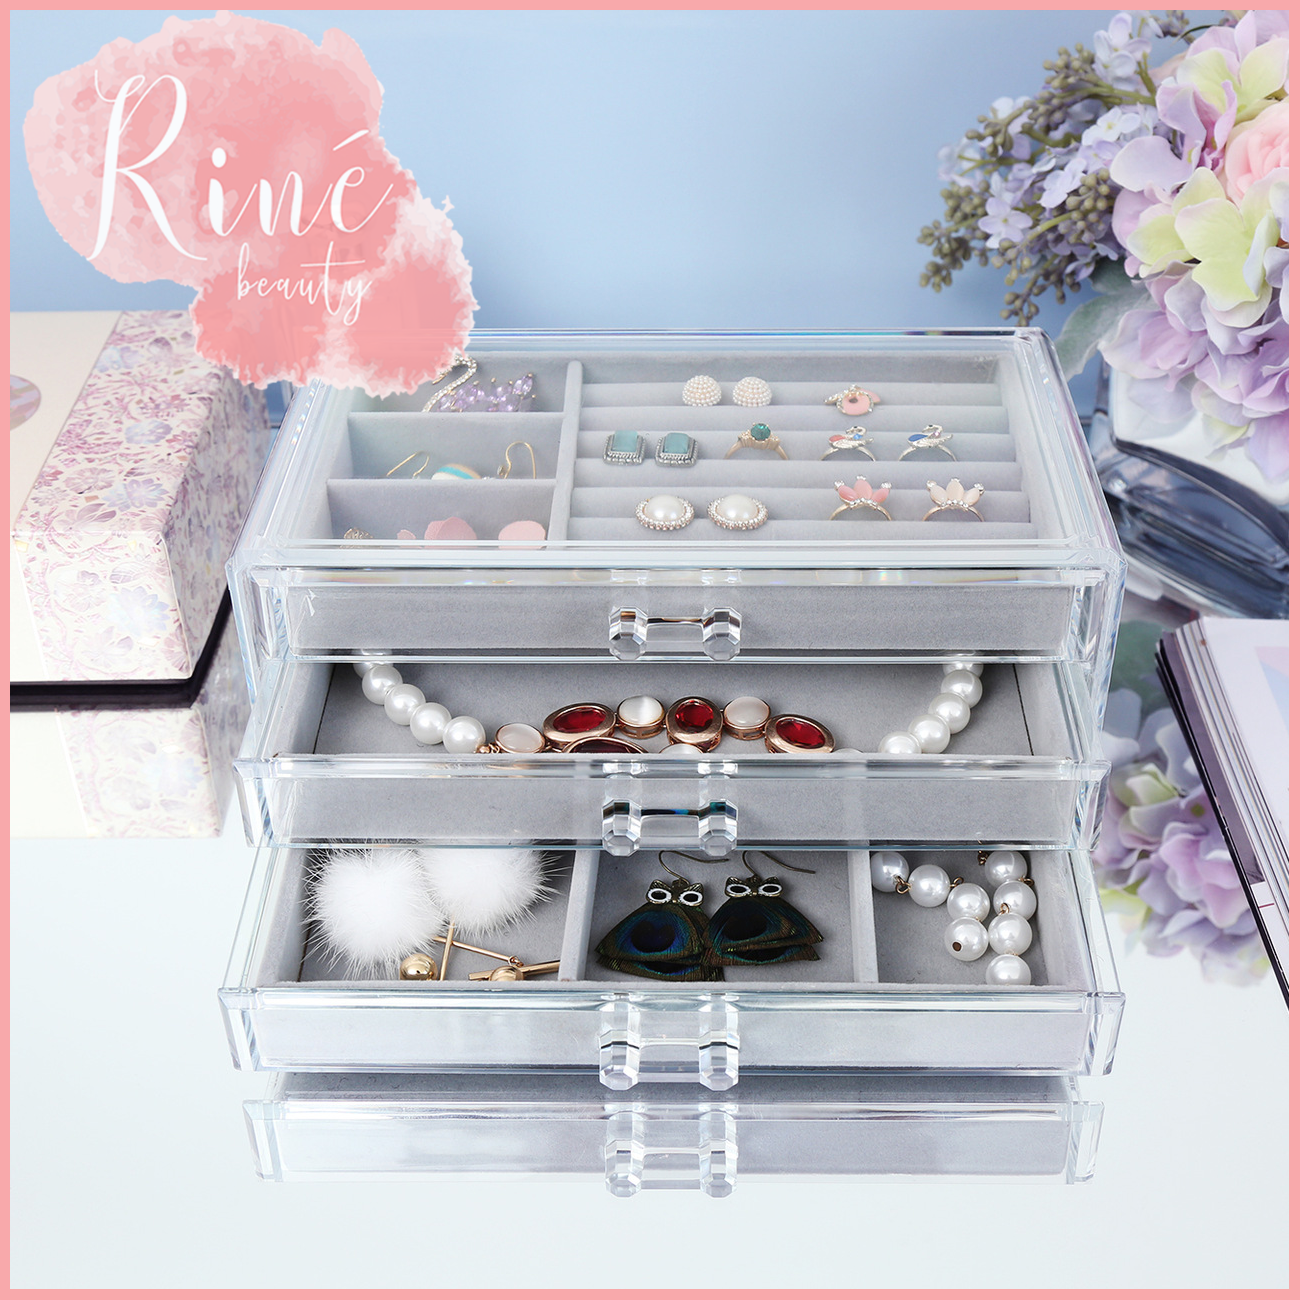 Rine Beauty ถาดเครื่องประดับ 3ชั้น เก็บเครื่องประดับ แหวน สร้อยคอ ต่างหู ผ้ากำมะหยี่ คุณภาพพรีเมียม หรูหรา Premium Quality velvet jewelry accessories storage box tray